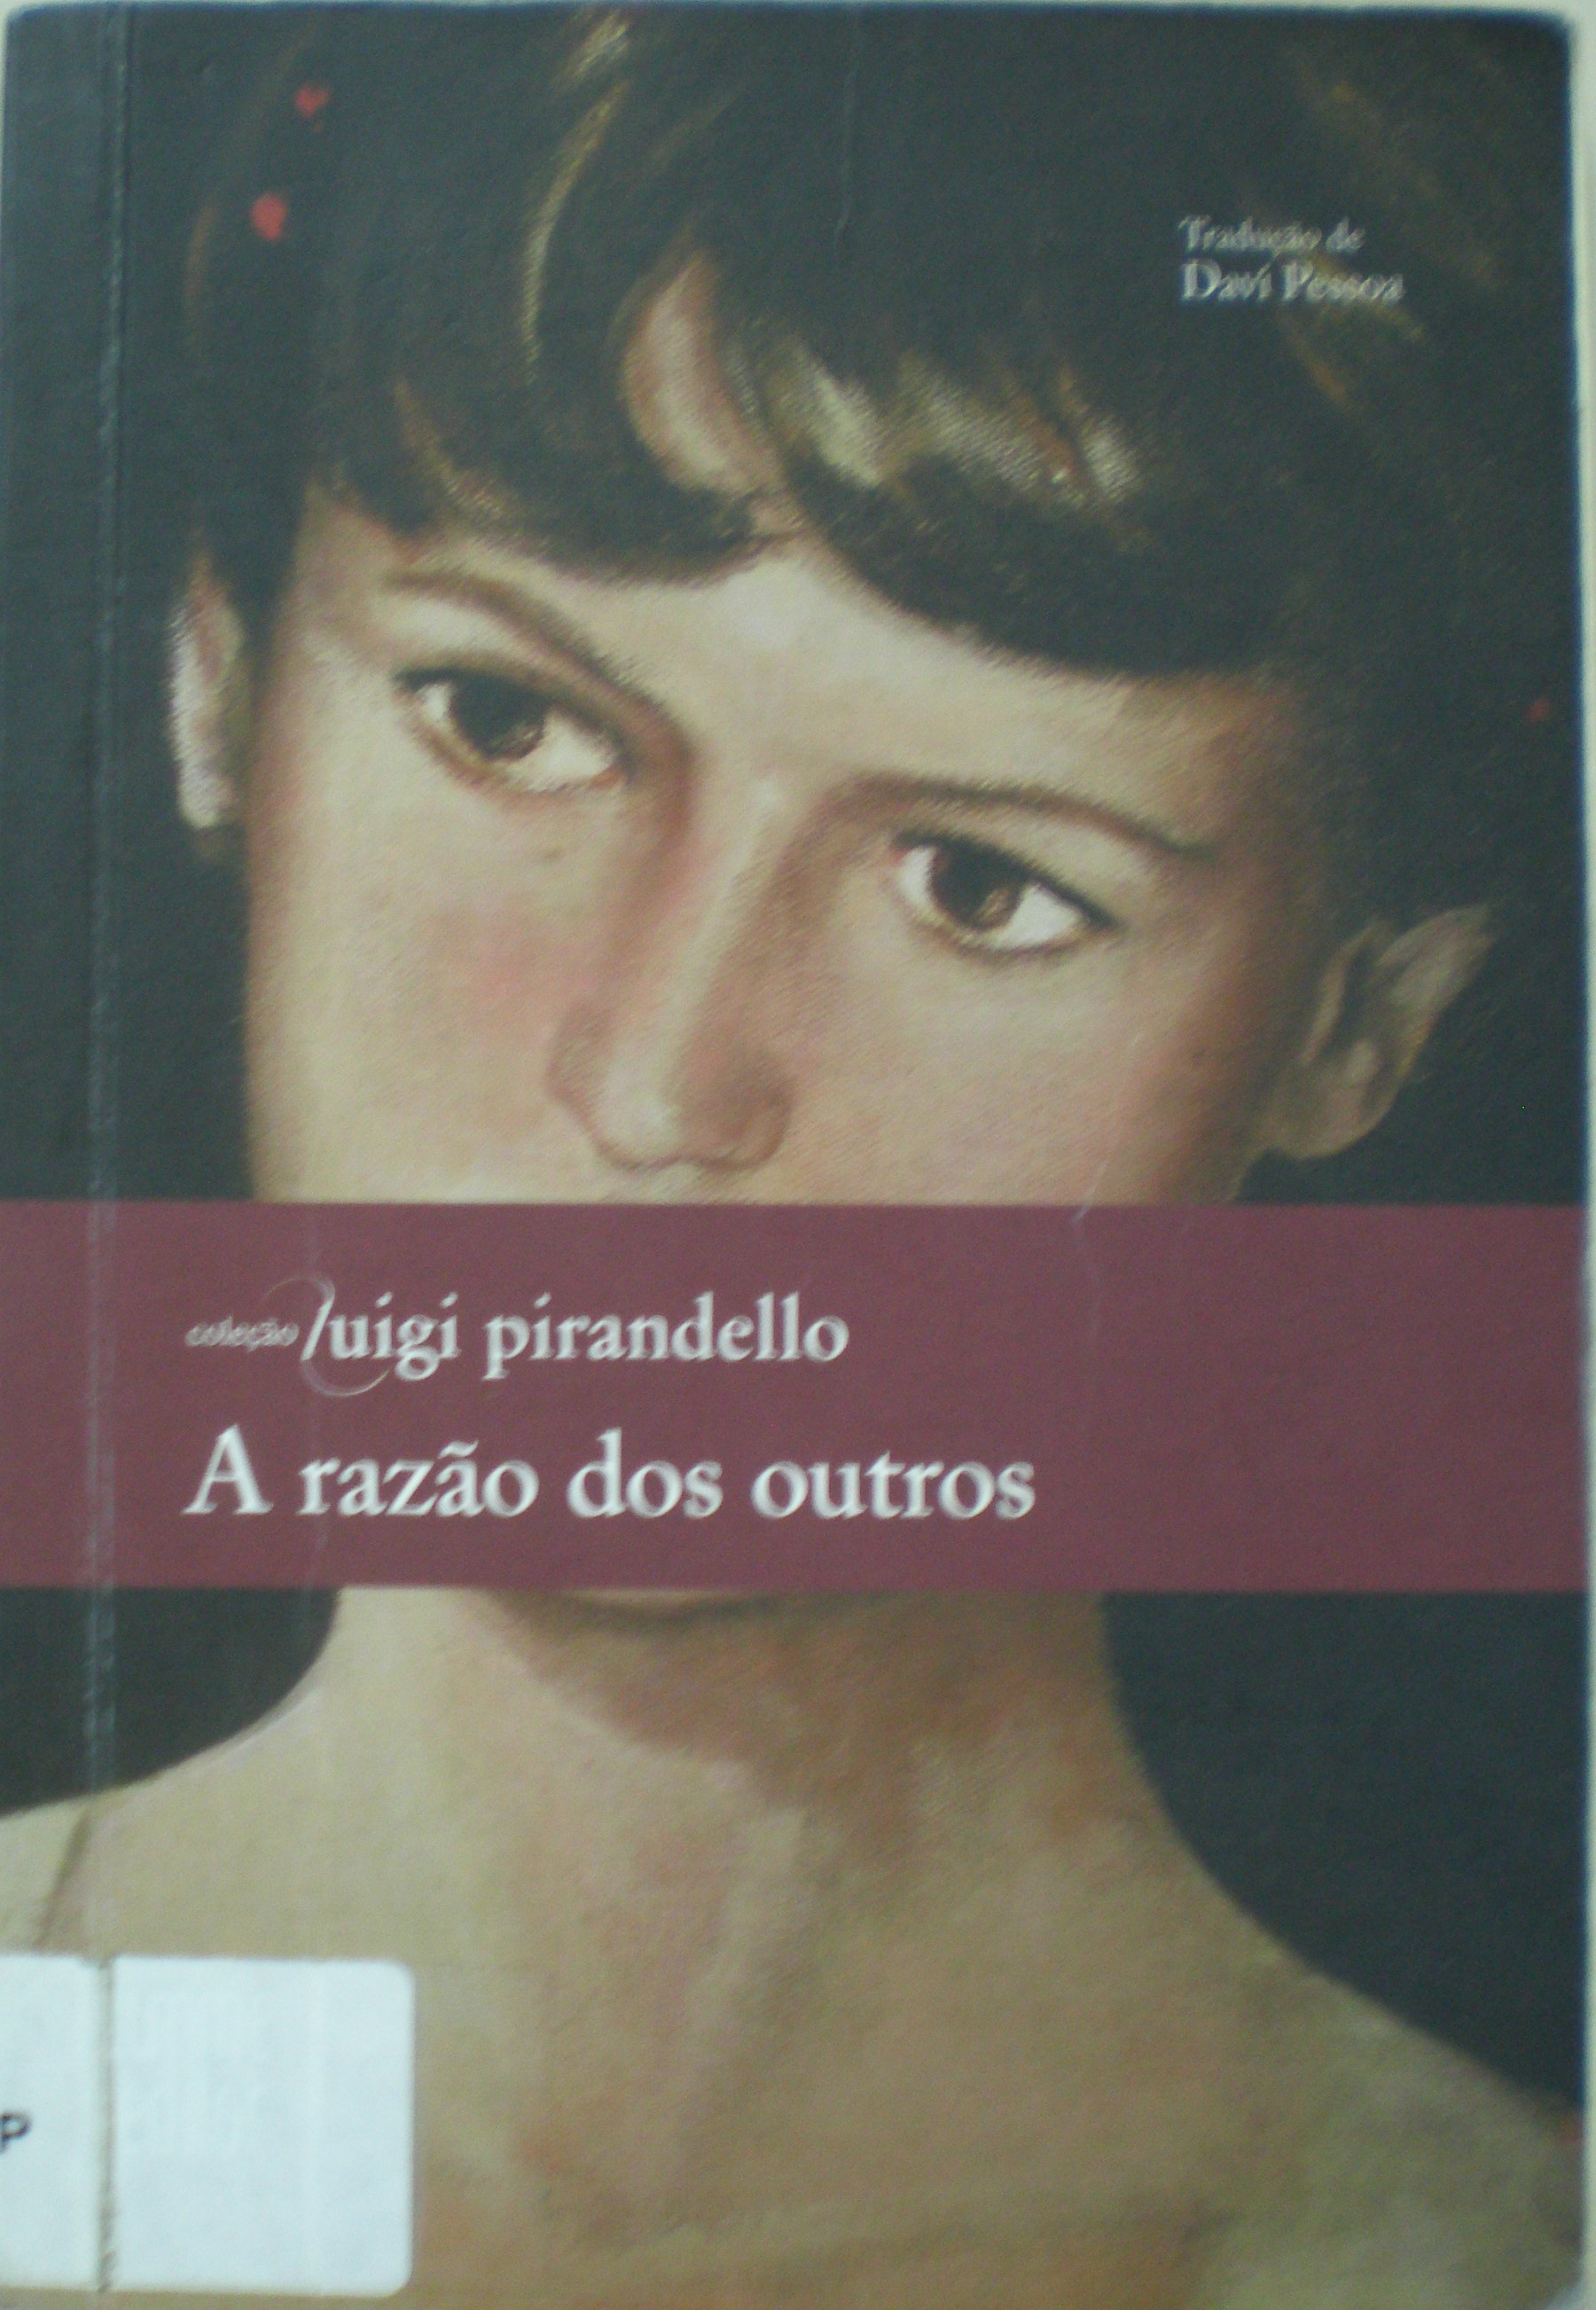 https://www.literaturabrasileira.ufsc.br/_images/obras/p1010094.jpg